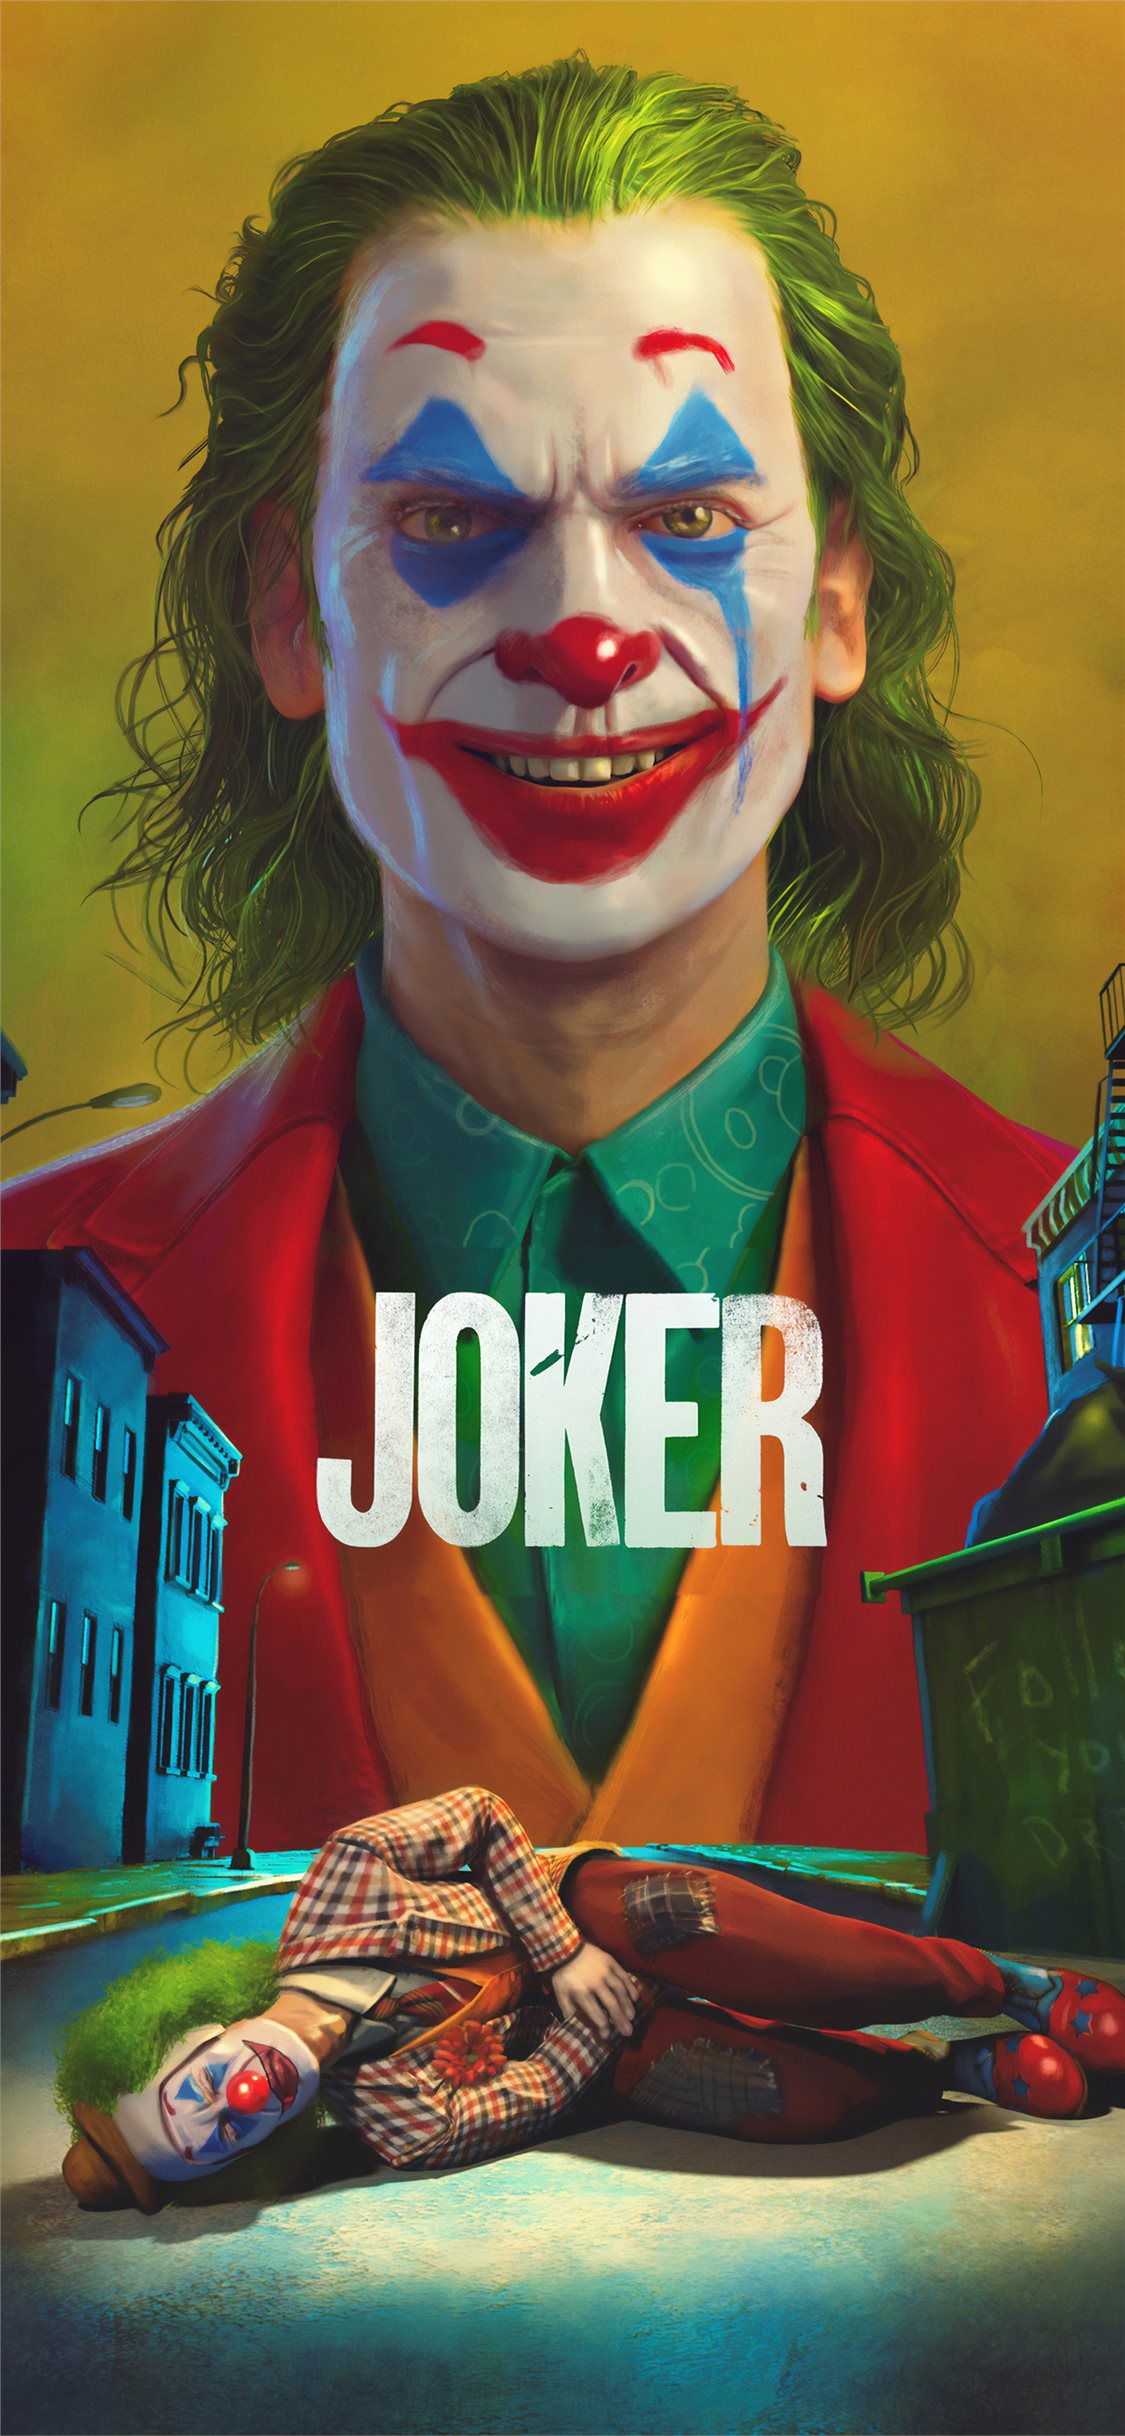 Joker 2019 Artwork Wallpapers